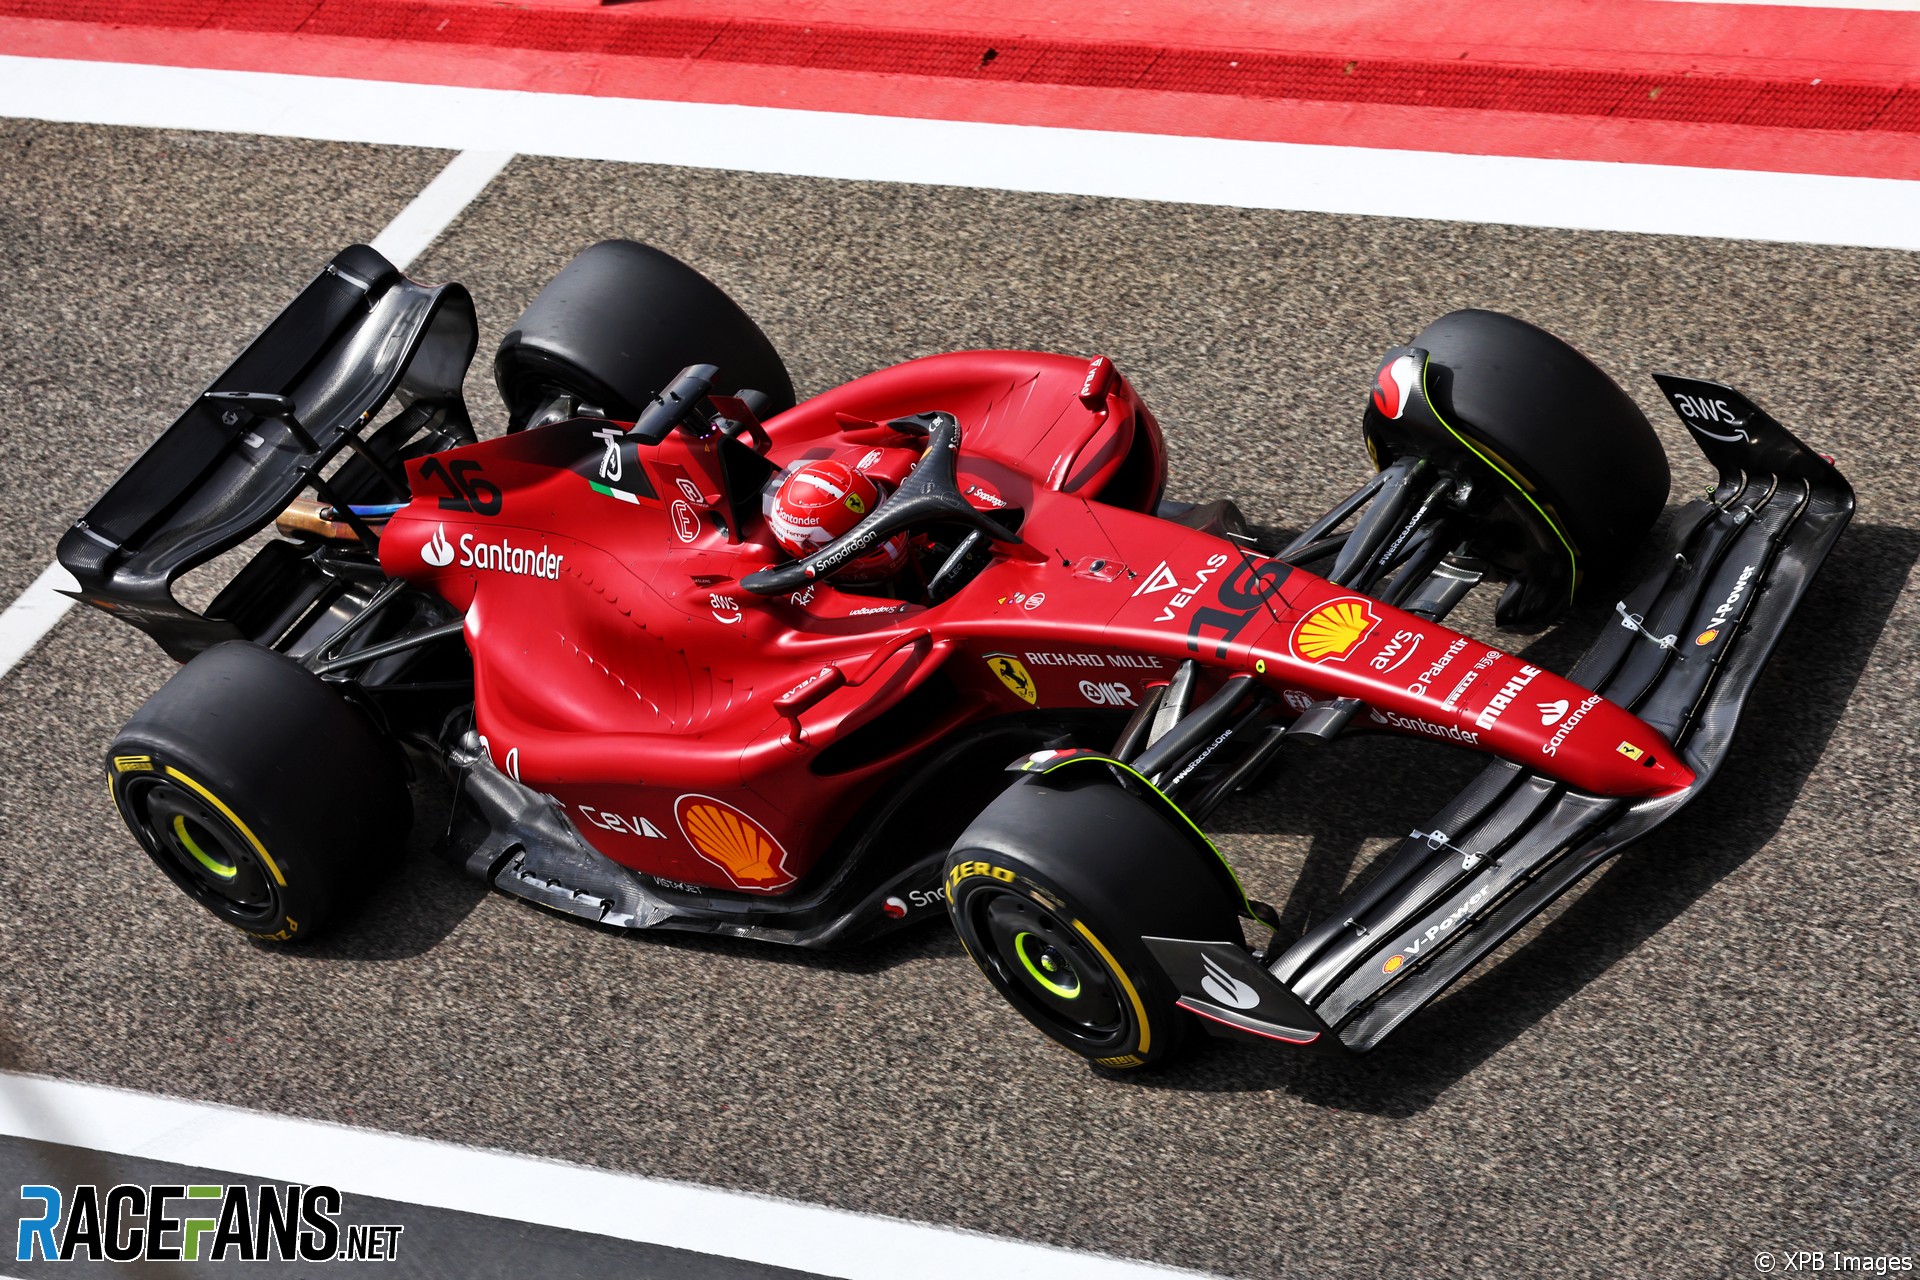 Charles Leclerc, Ferrari, Bahrain International Circuit, 2022 · RaceFans